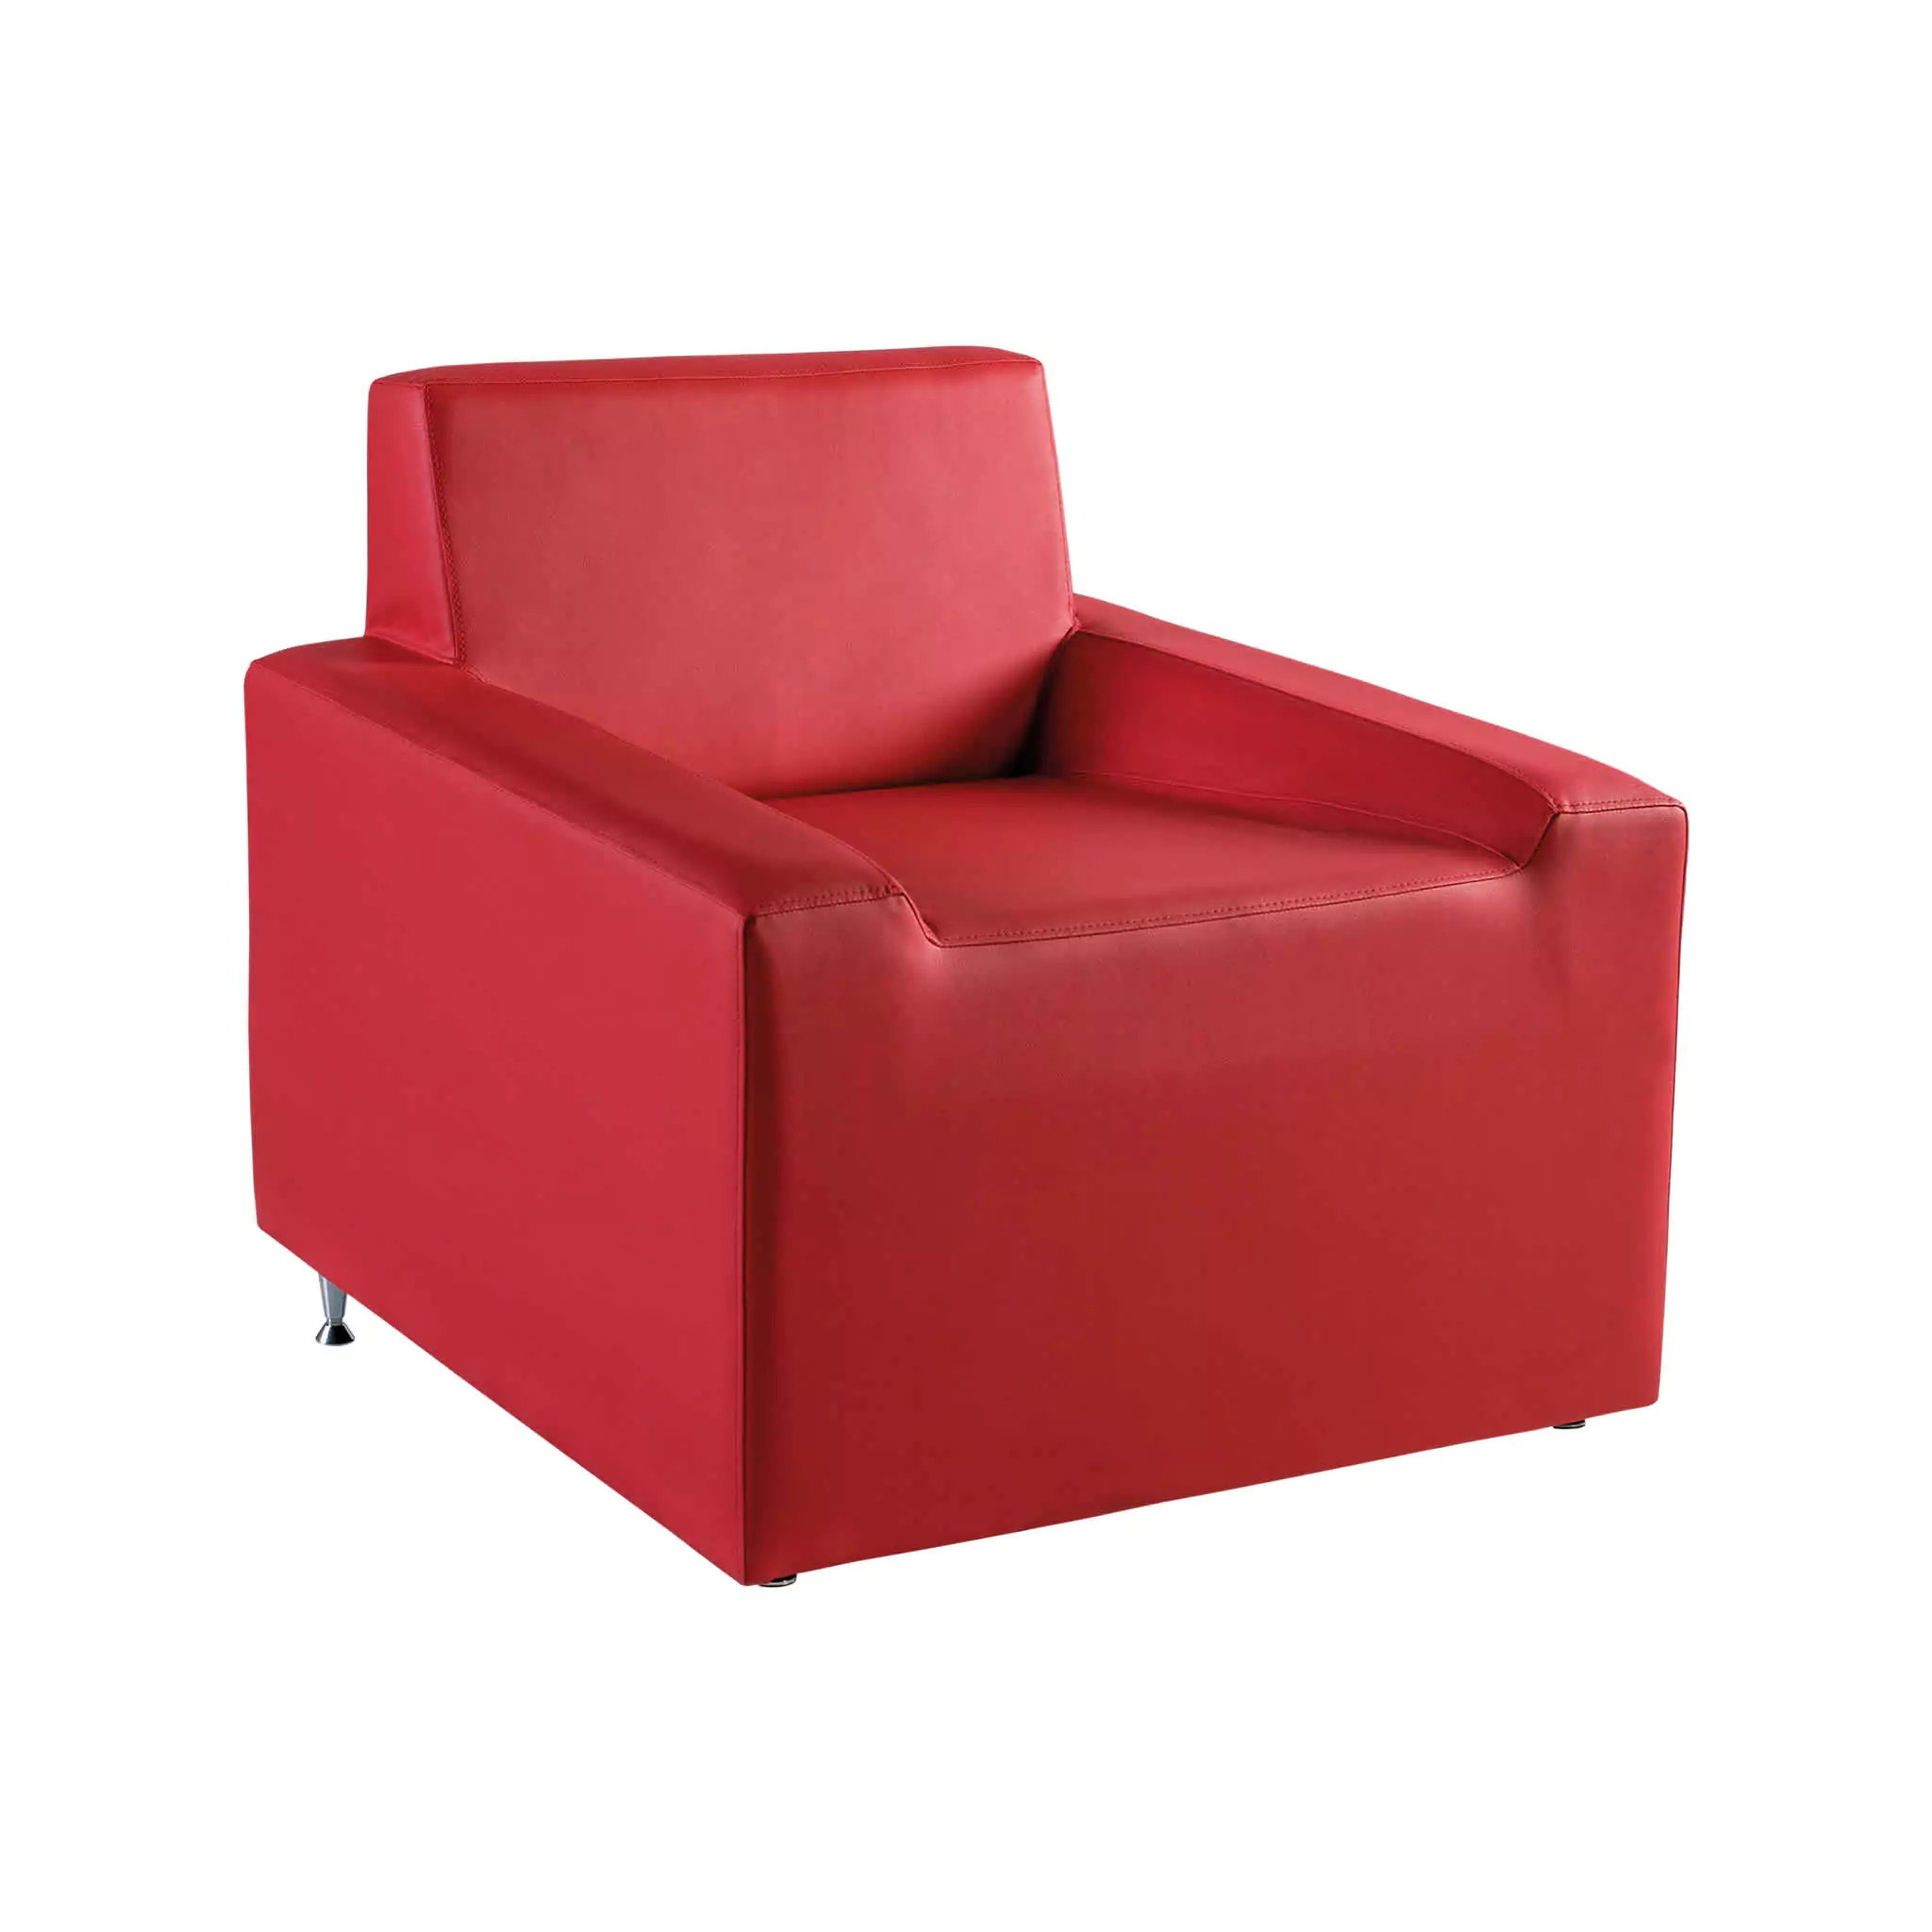 Seat Model: RUBY SEAT Image